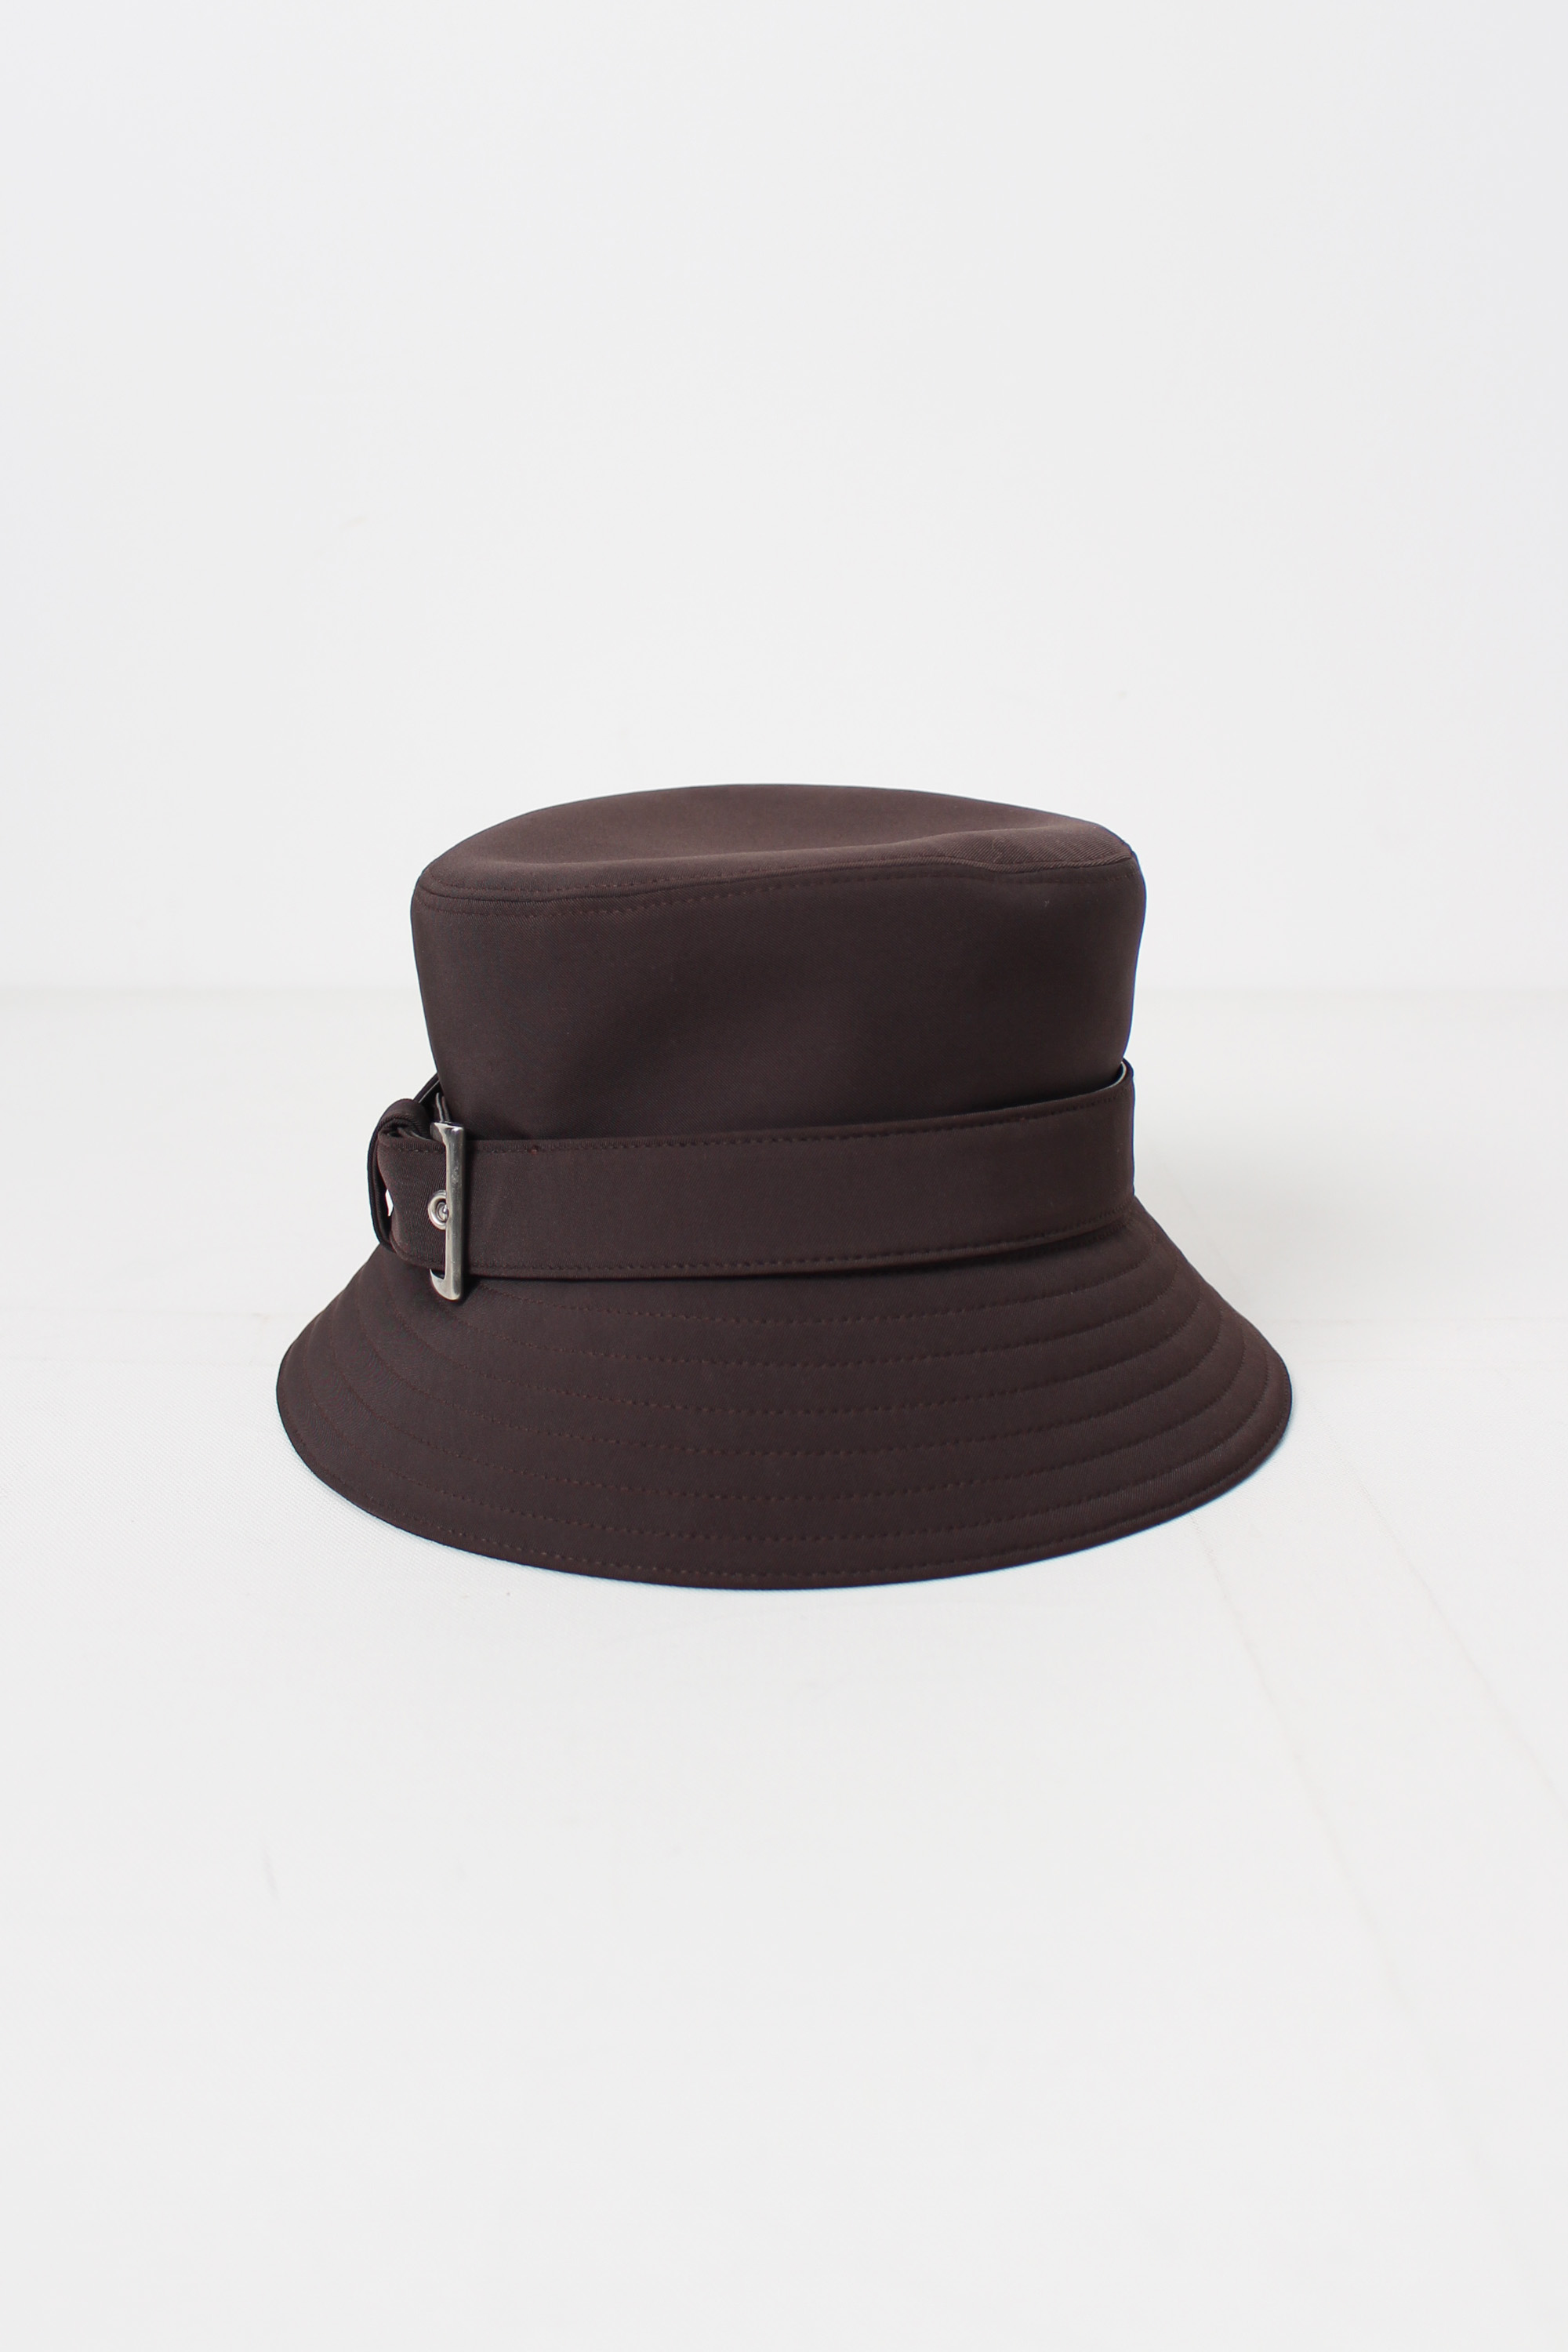 PRADA bucket hat